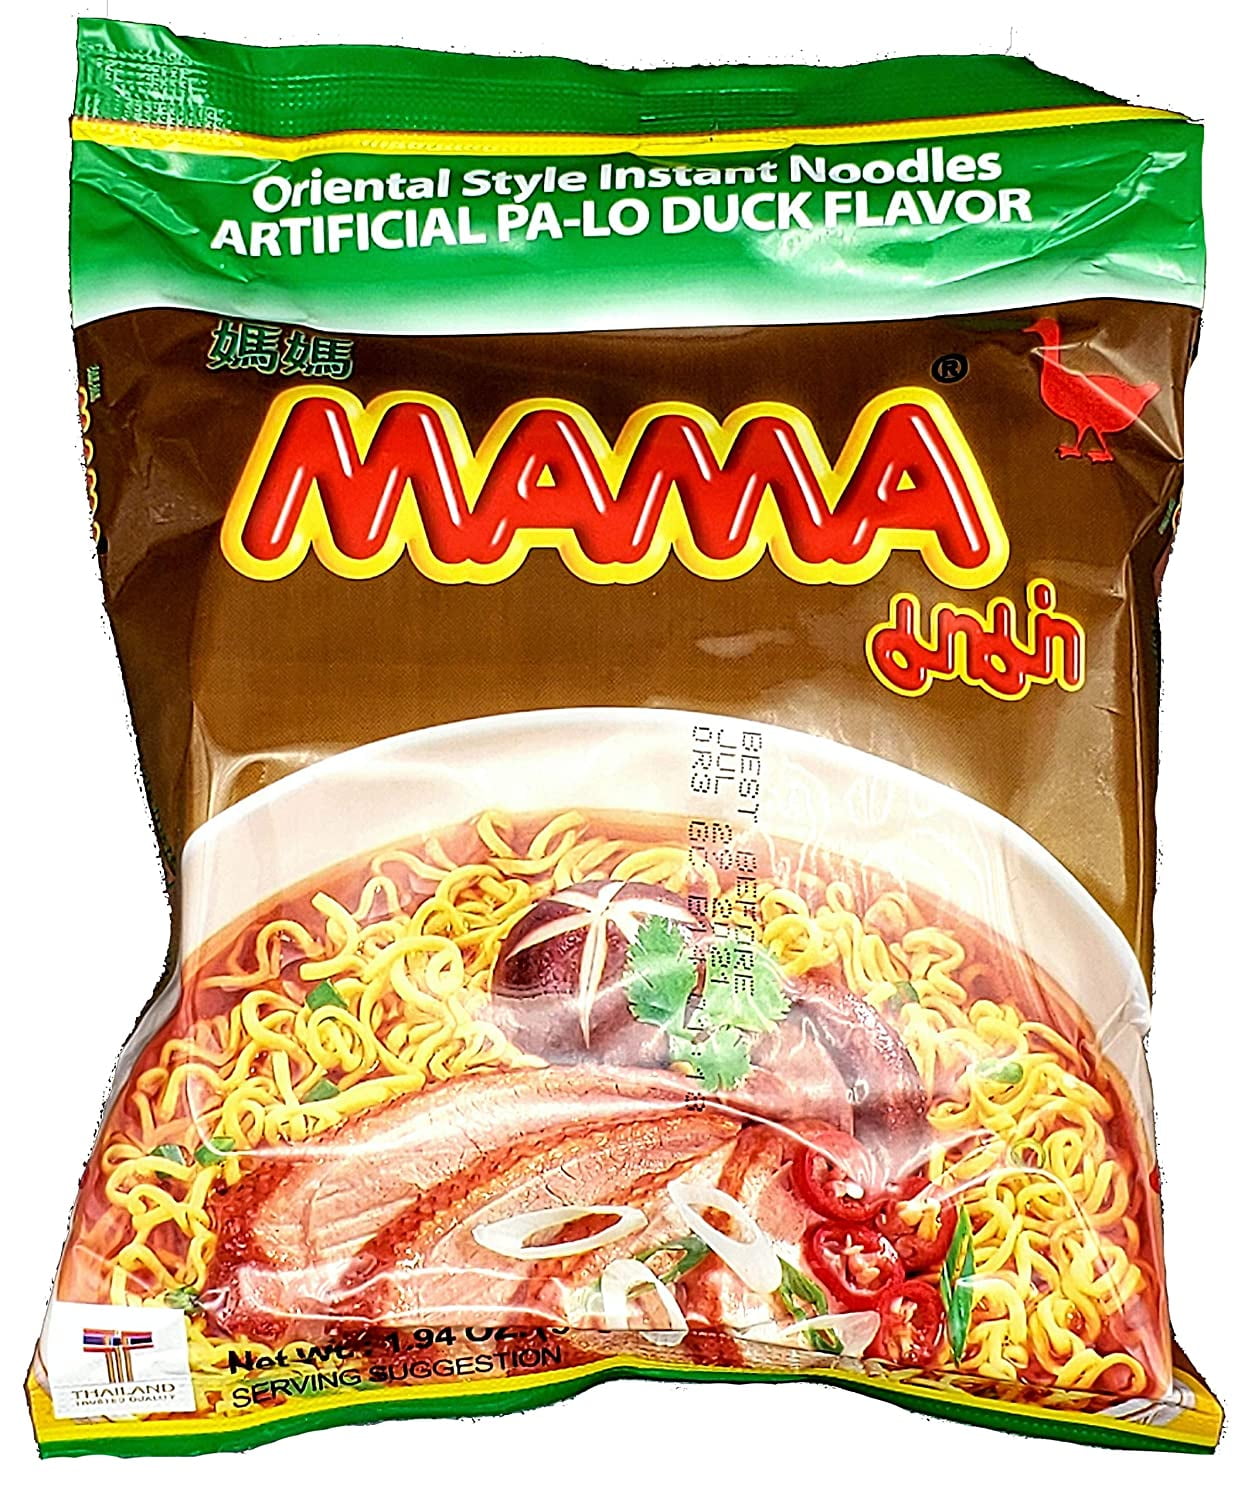 Mama Shrimp Flavor Noodle – Victoria Grocery